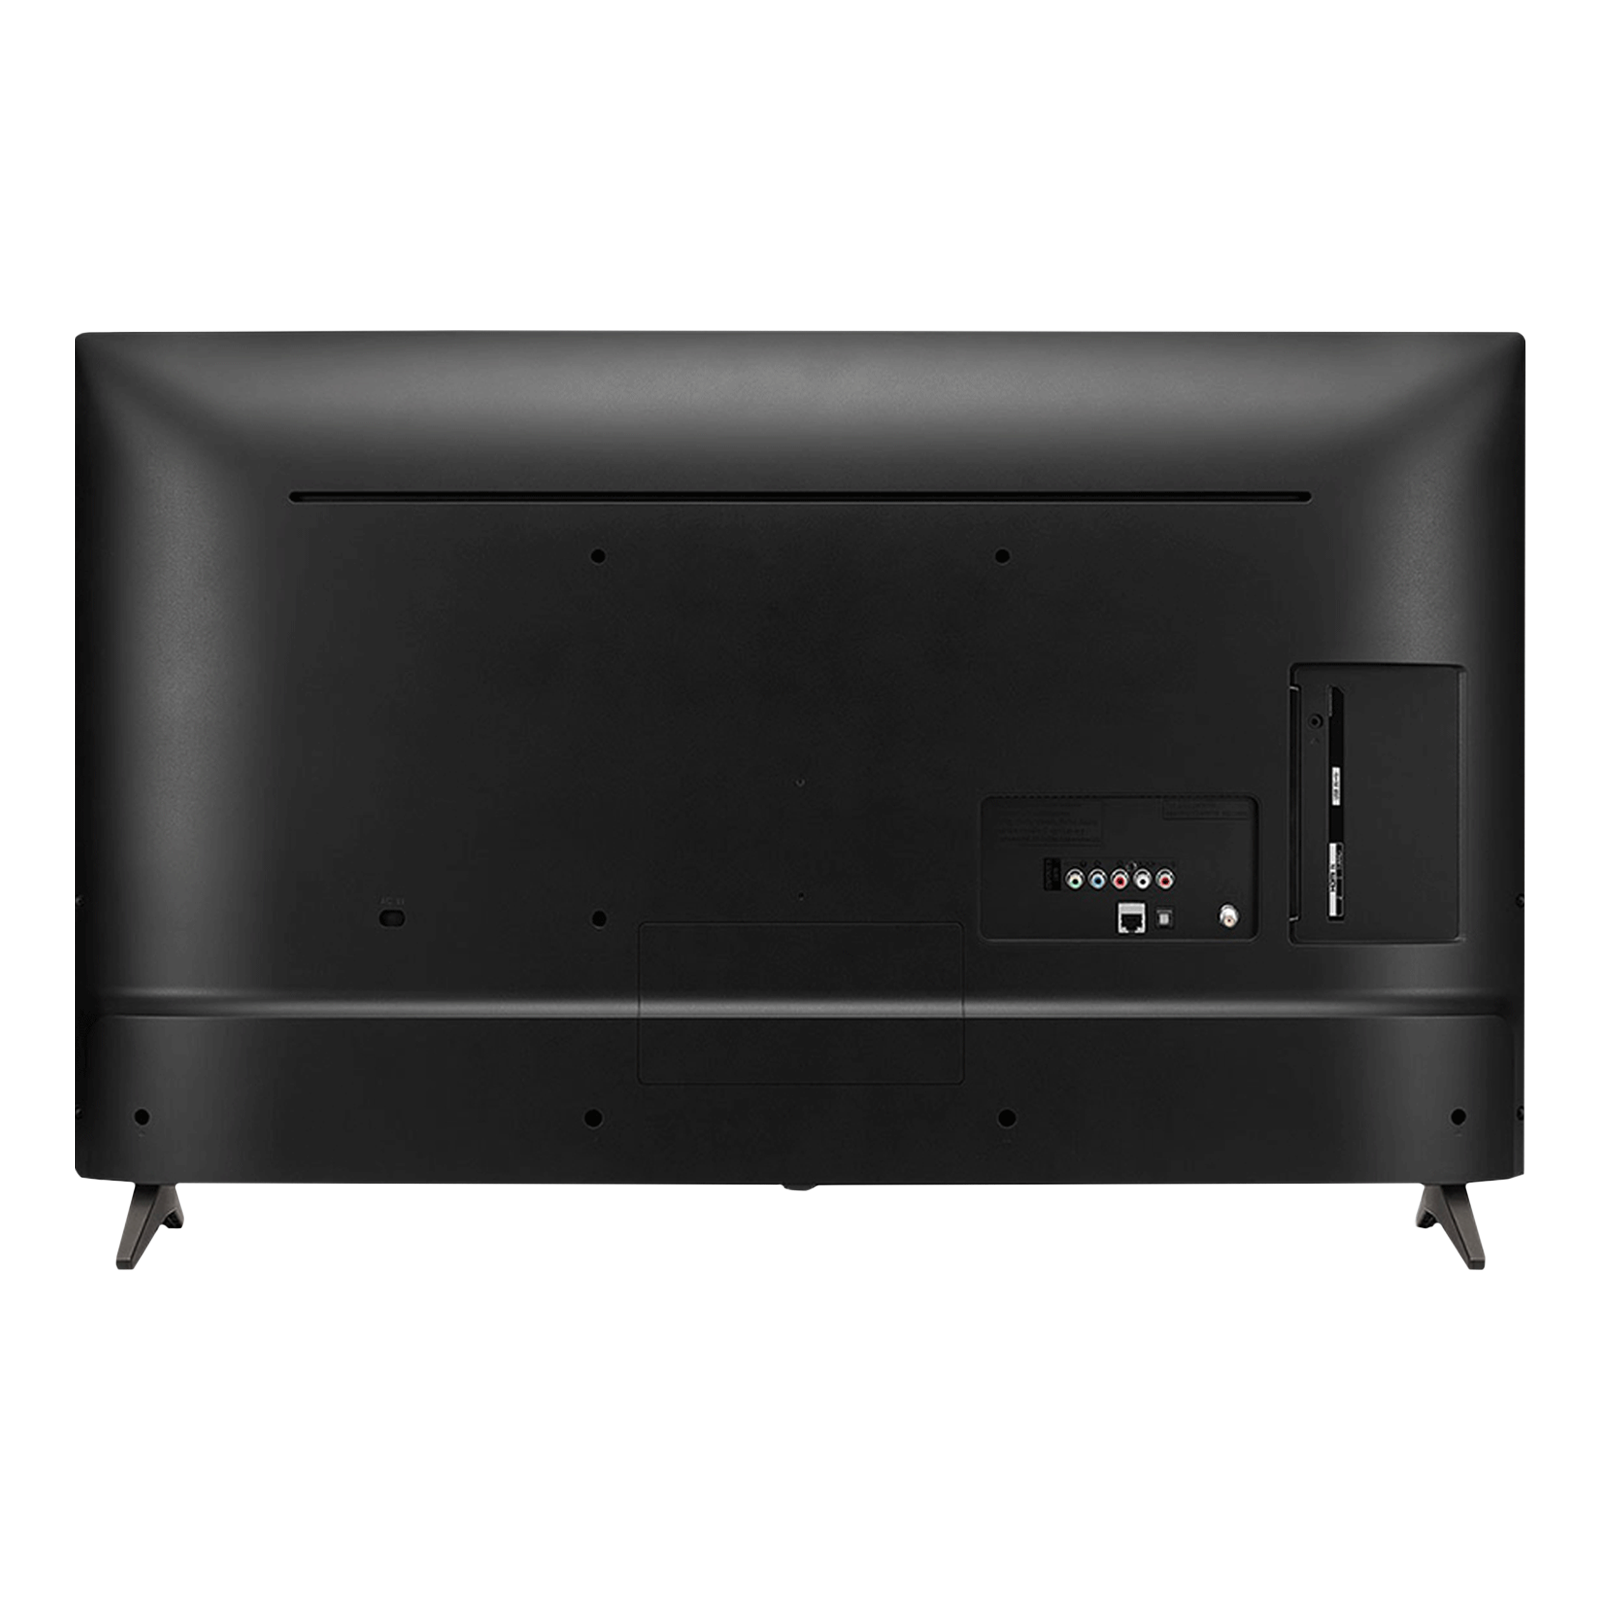 Buy LG 108 cm (43 inch) Full HD LED Smart TV, 43LM5620 at Reliance Digital